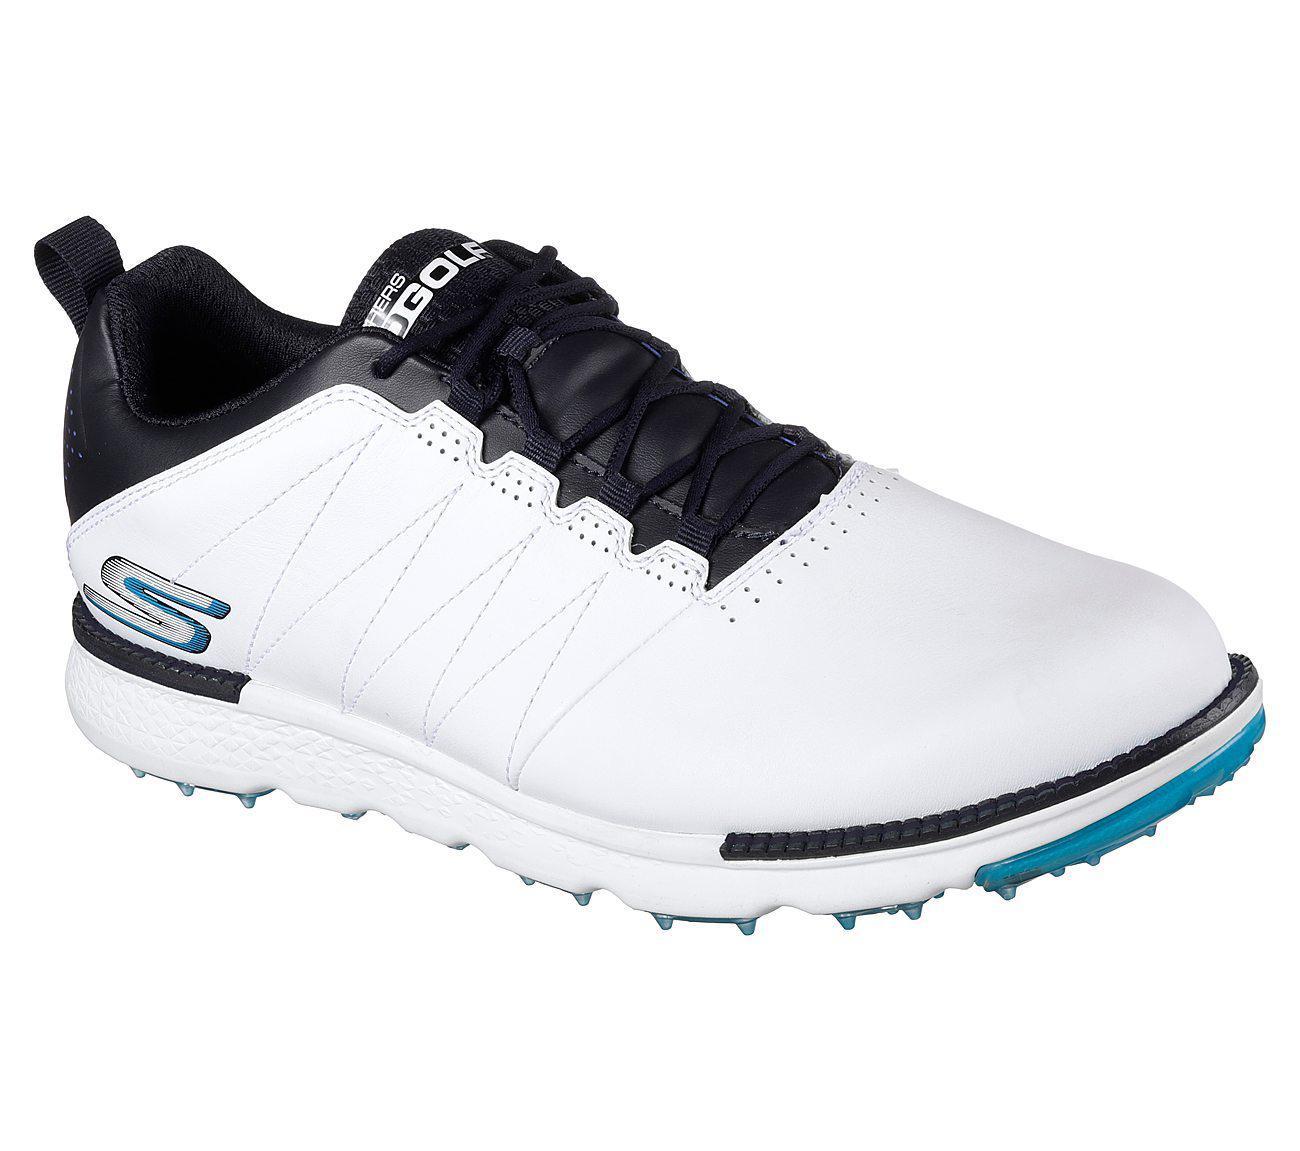 Skechers Elite 3 Plus Fit Golf Shoes - White / Navy